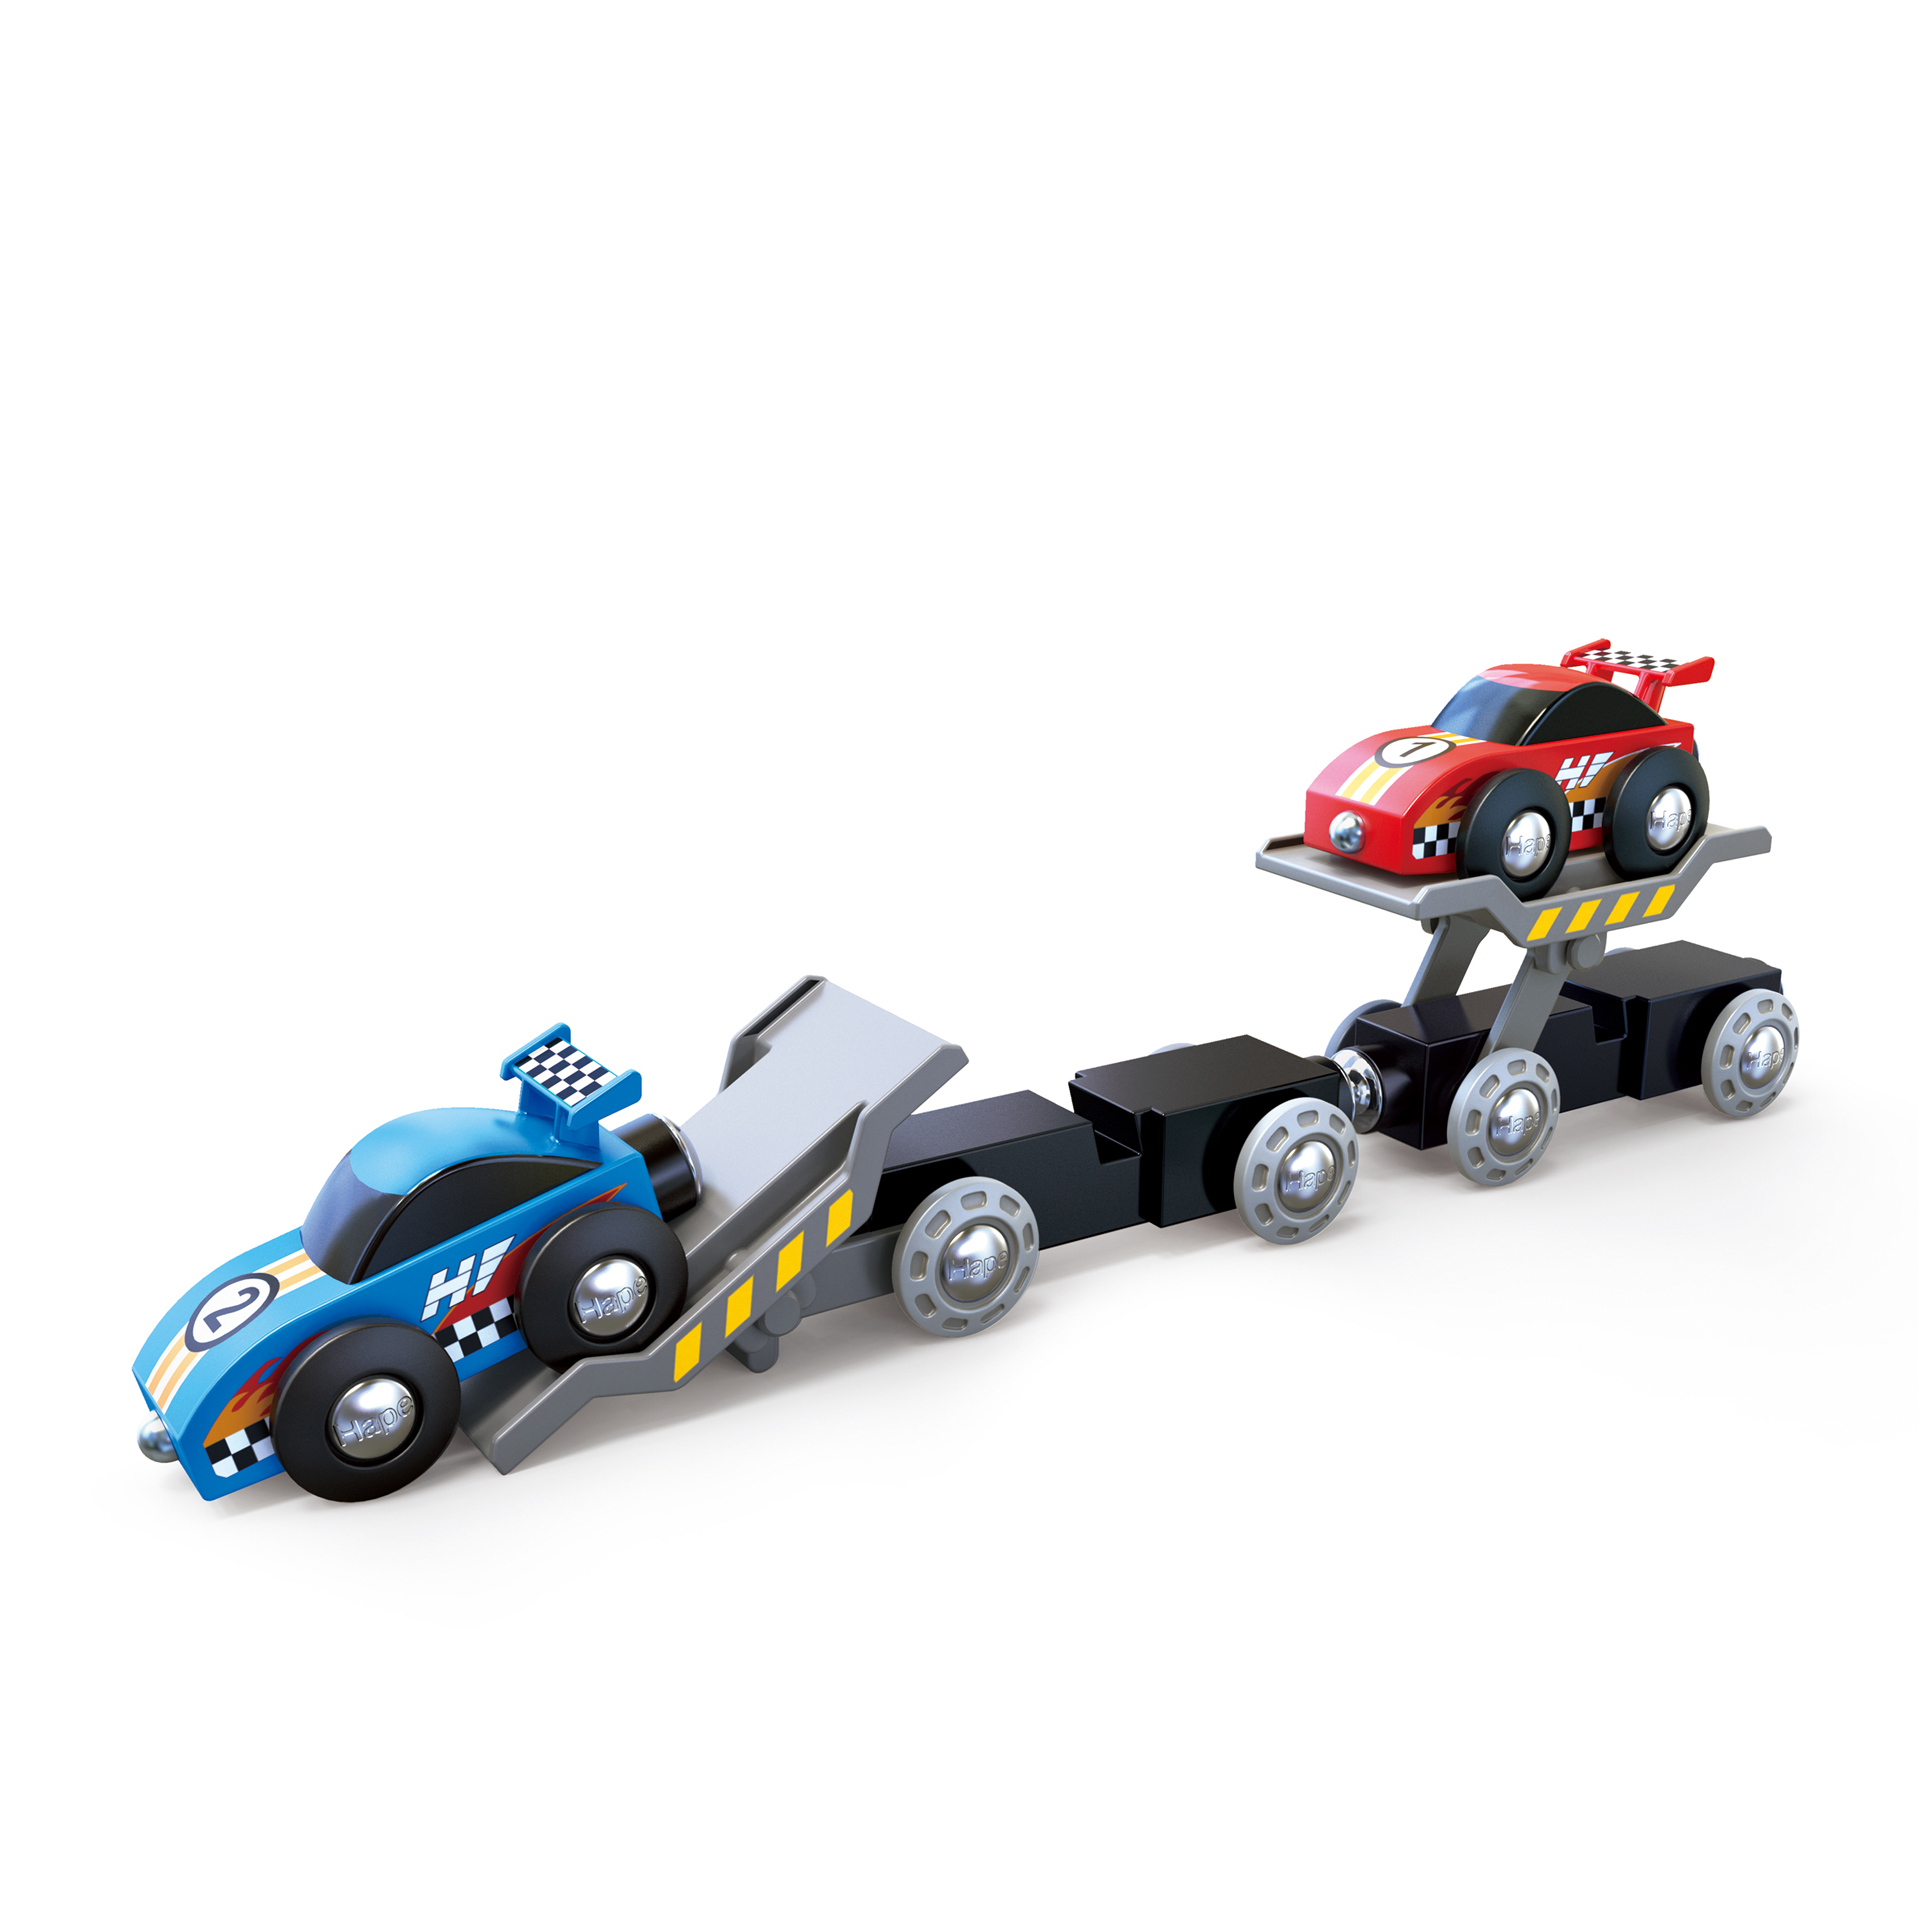 Hape Race Car Transporter | Set Transportasi Kereta Mainan Kayu Enam Bagian untuk Anak-anak